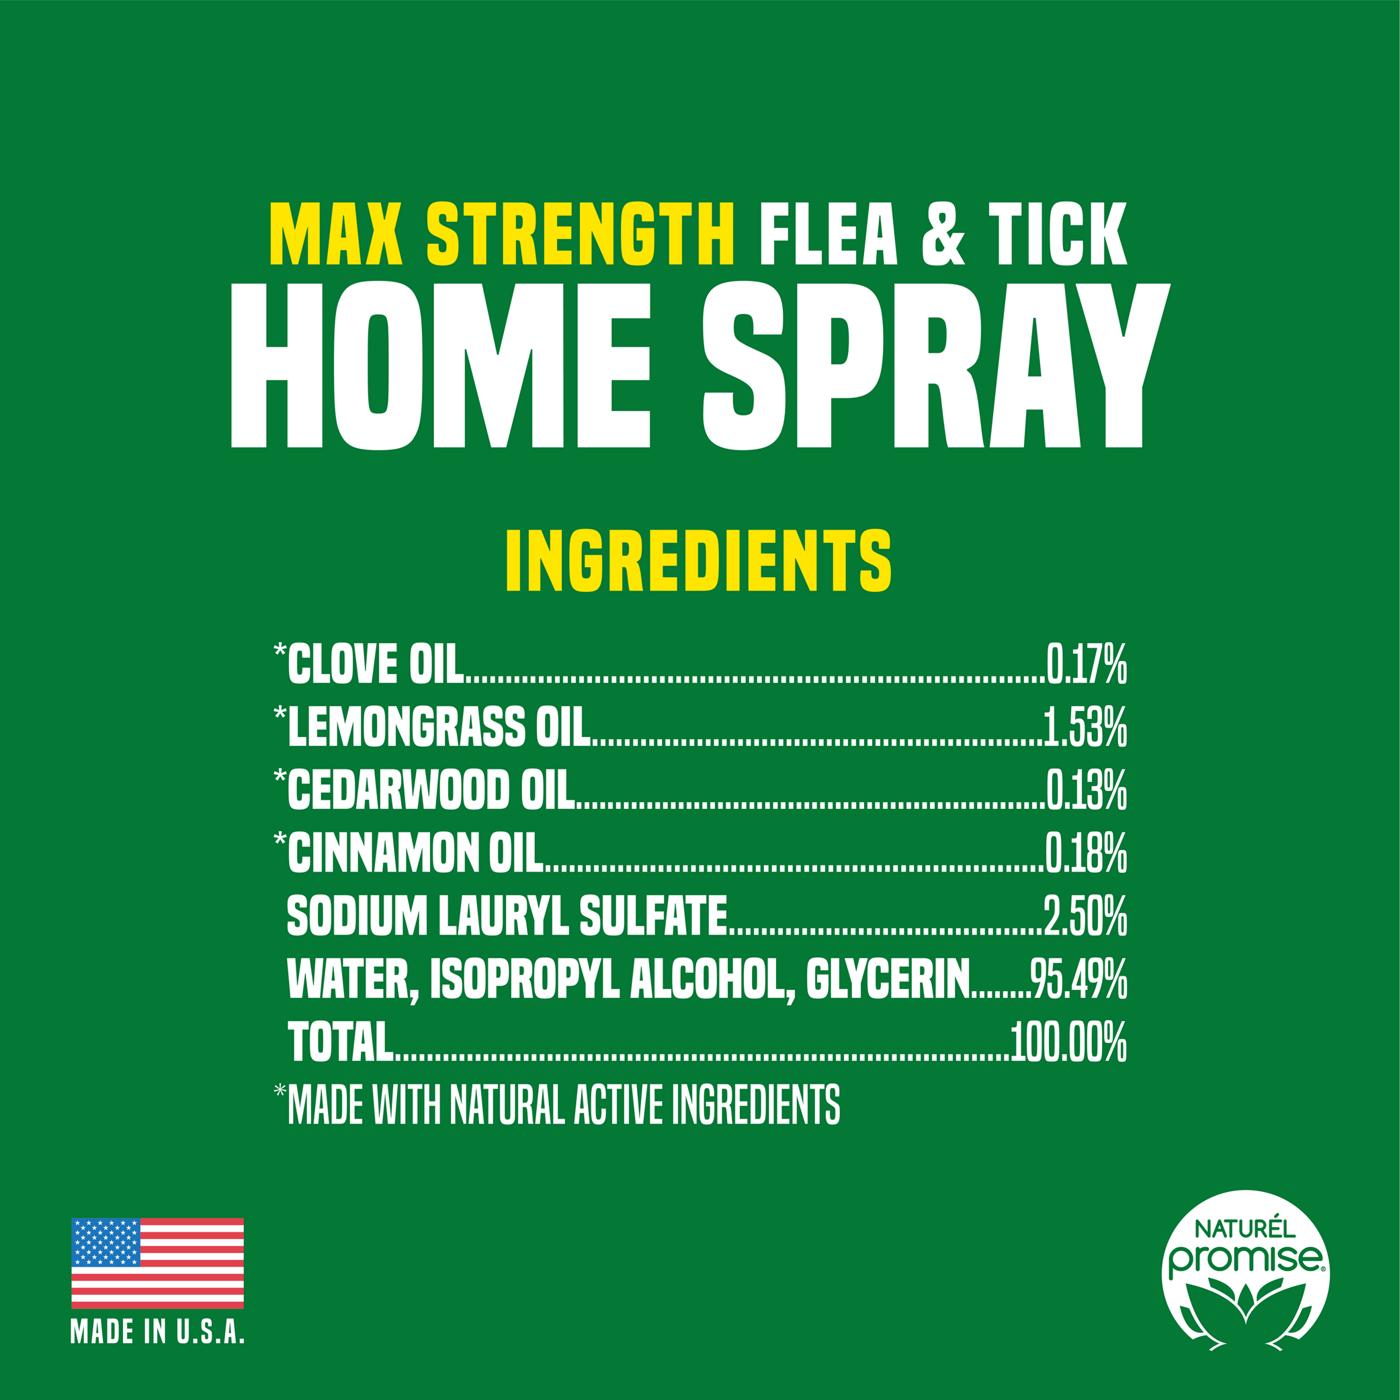 Flick! Max Strength Flea & Tick Home Spray; image 4 of 7